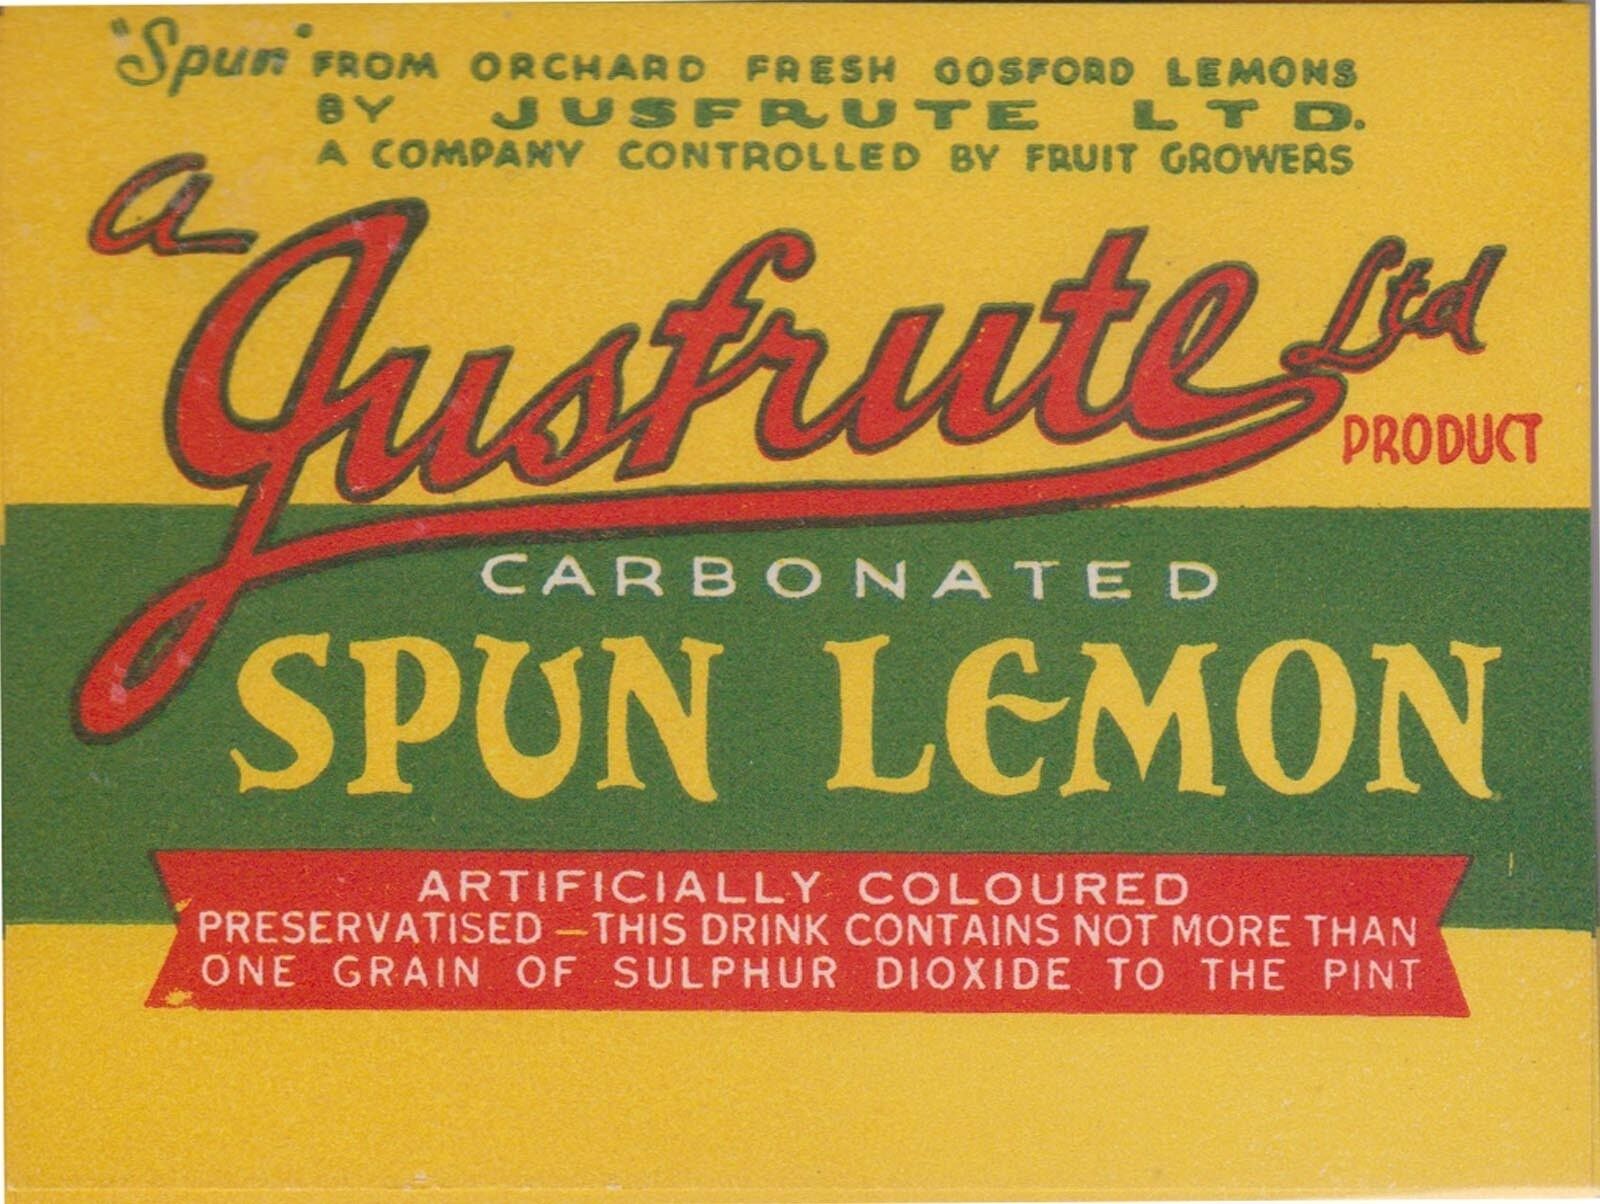 (LOA4)1950-60 AU Justfrute spun Lemon with sulfur Dioxide label 